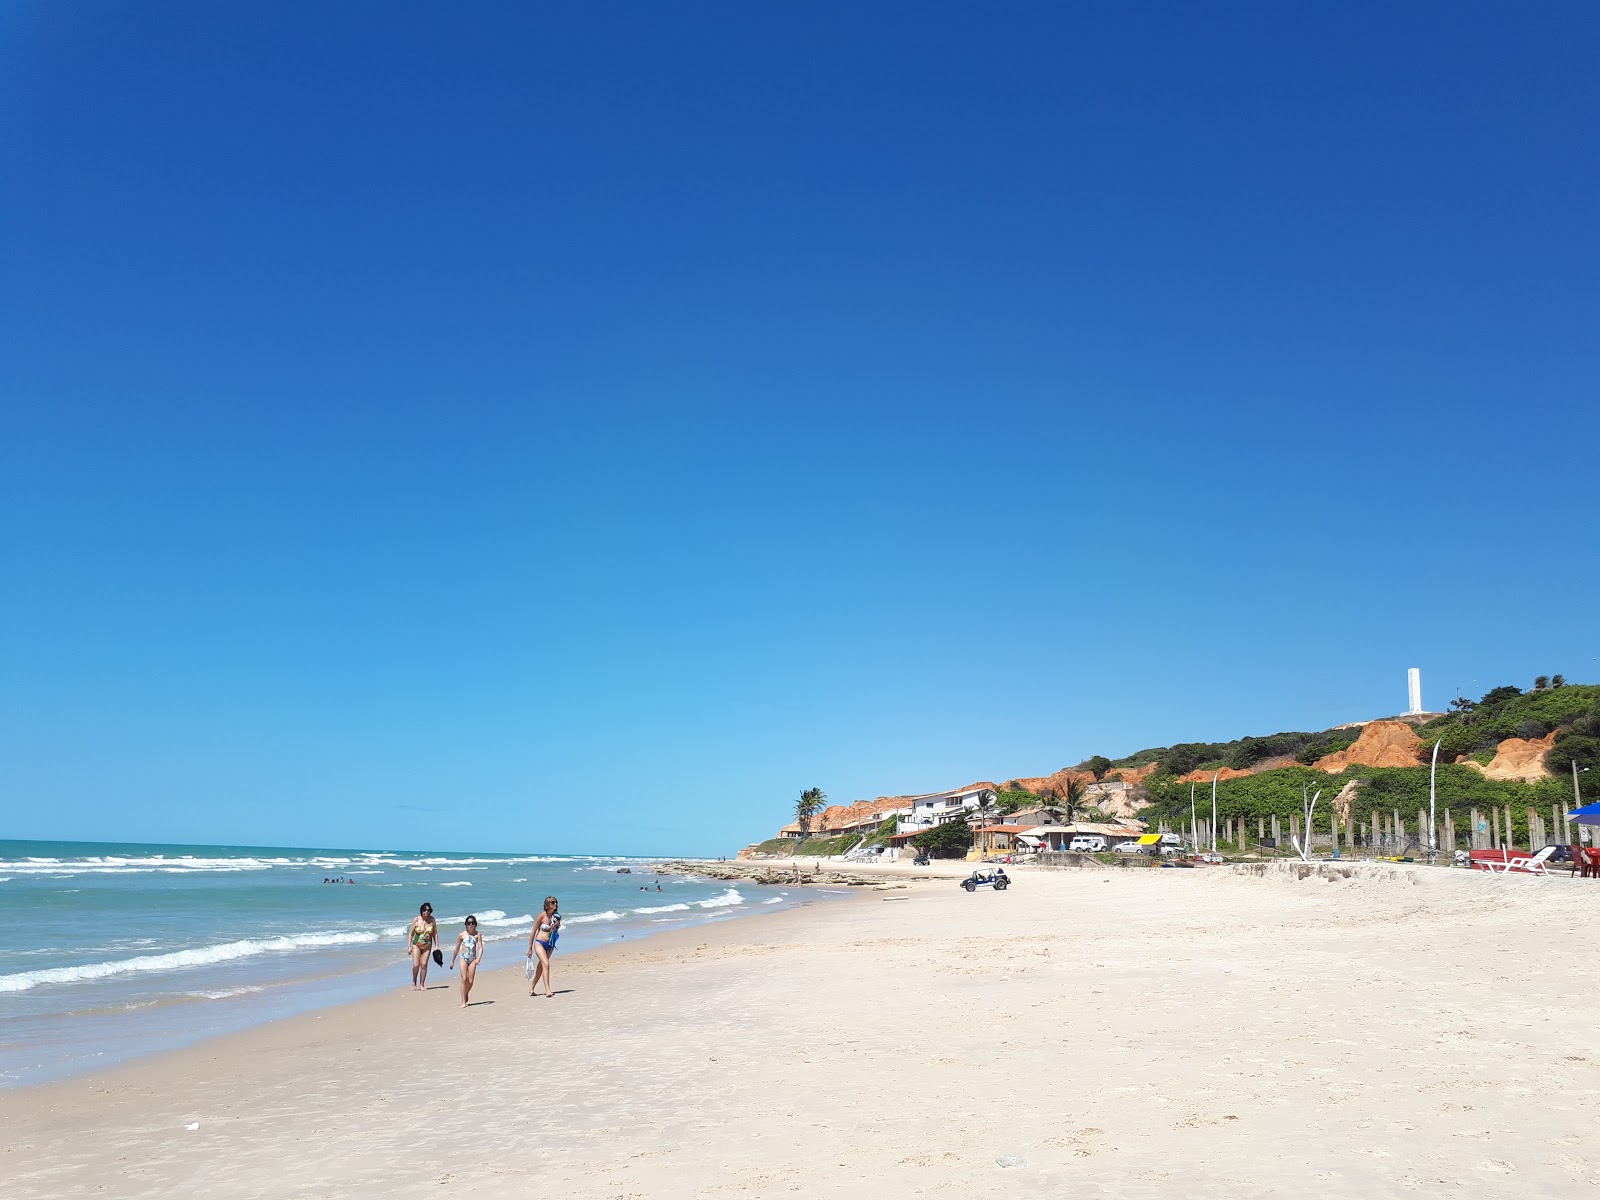 Foto av Morro Branco stranden med ljus sand yta